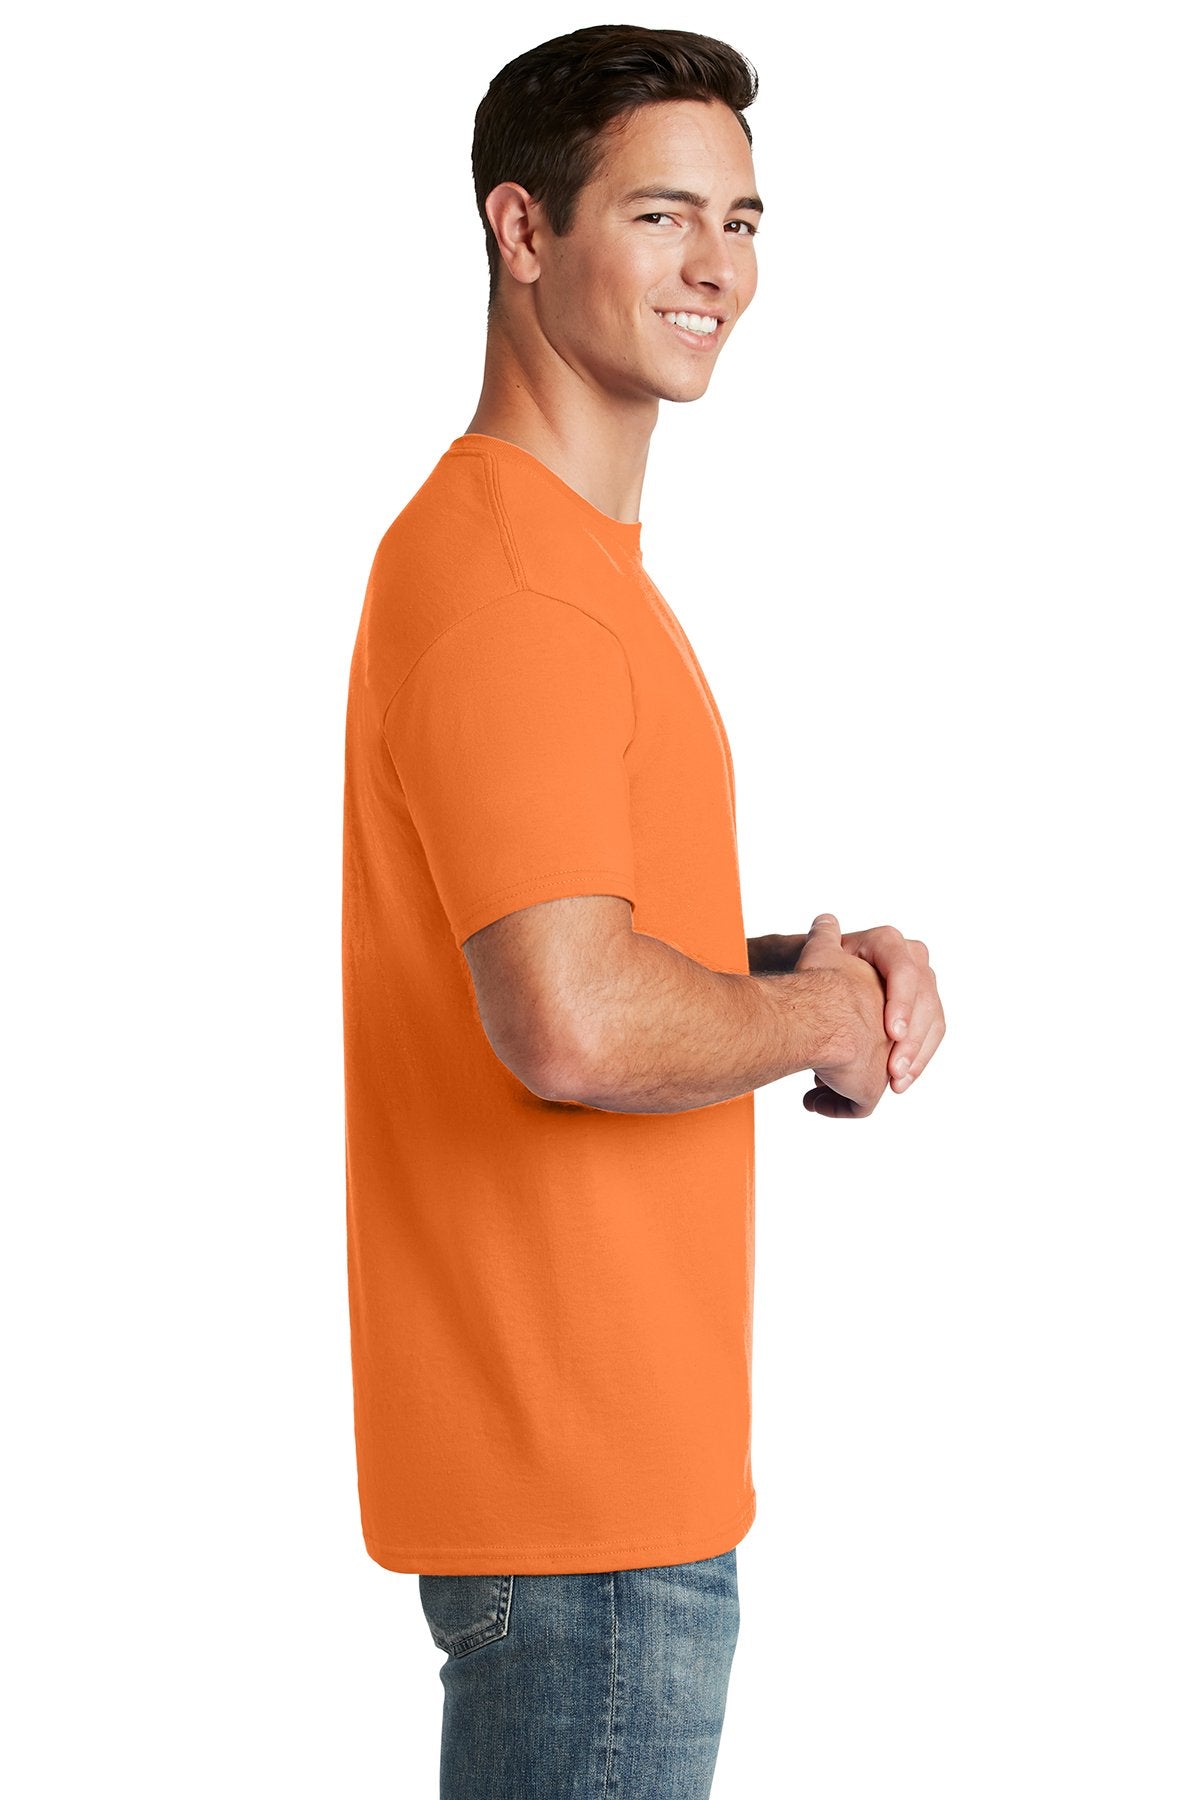 Jerzees Dri-Power Active 50/50 Cotton/Poly T-Shirt 29M Safety Orange